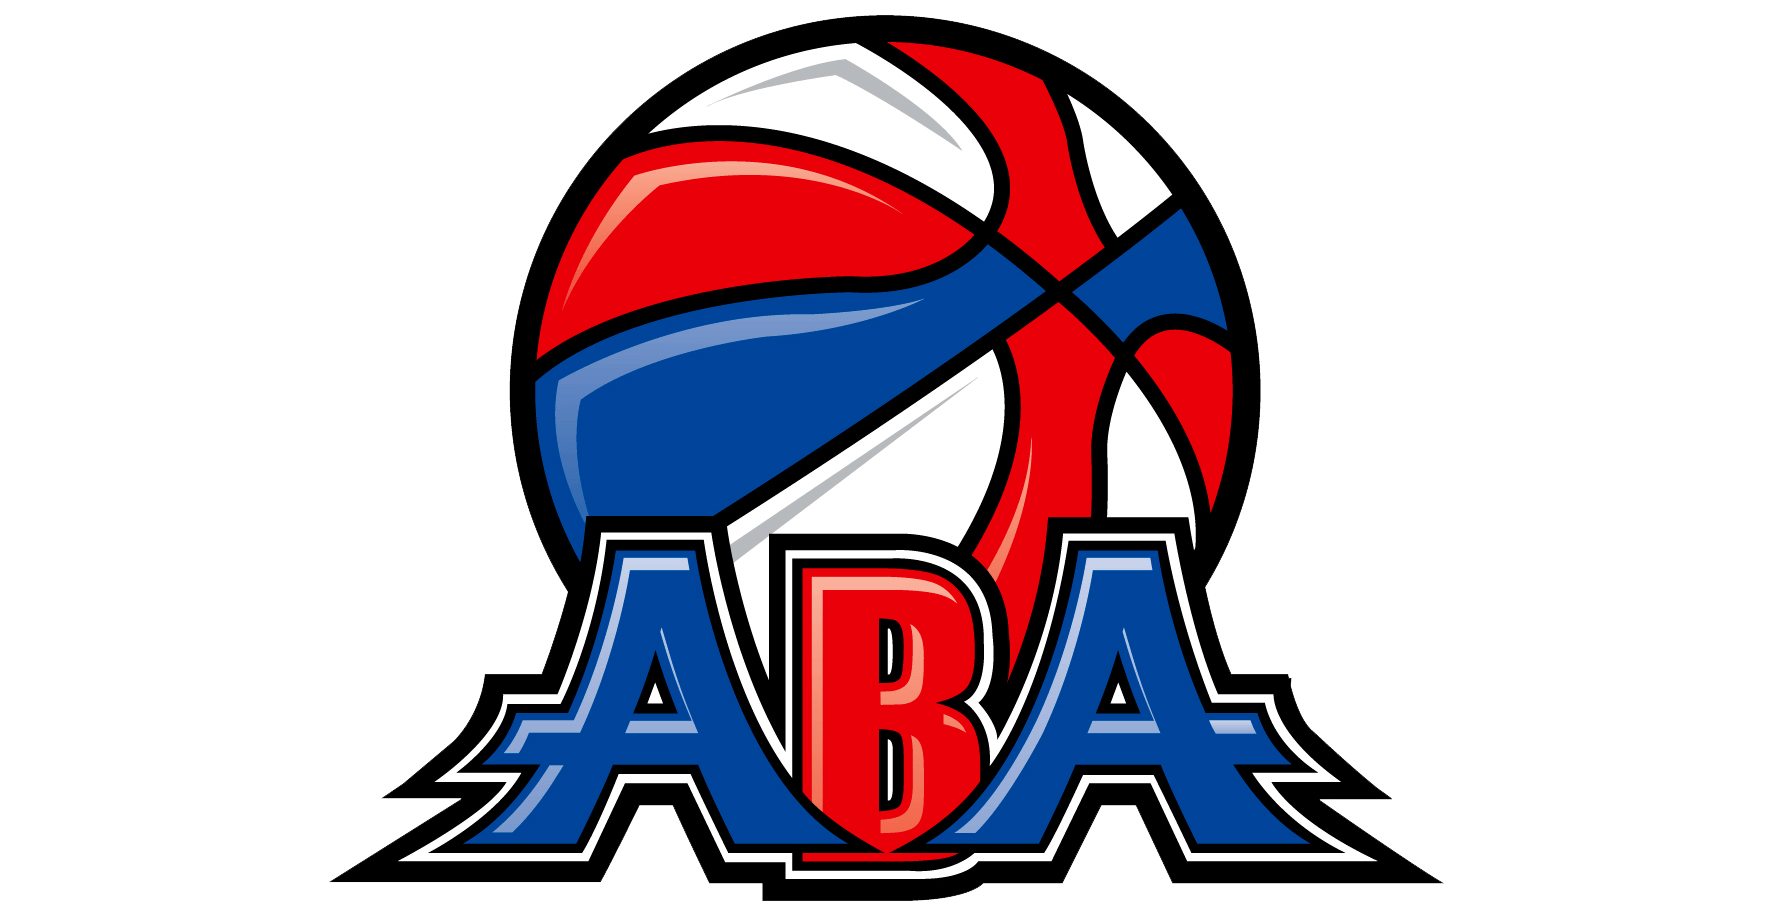 ABA Basketball Logo - ABA Logo, American Basketball Assotiation symbol meaning